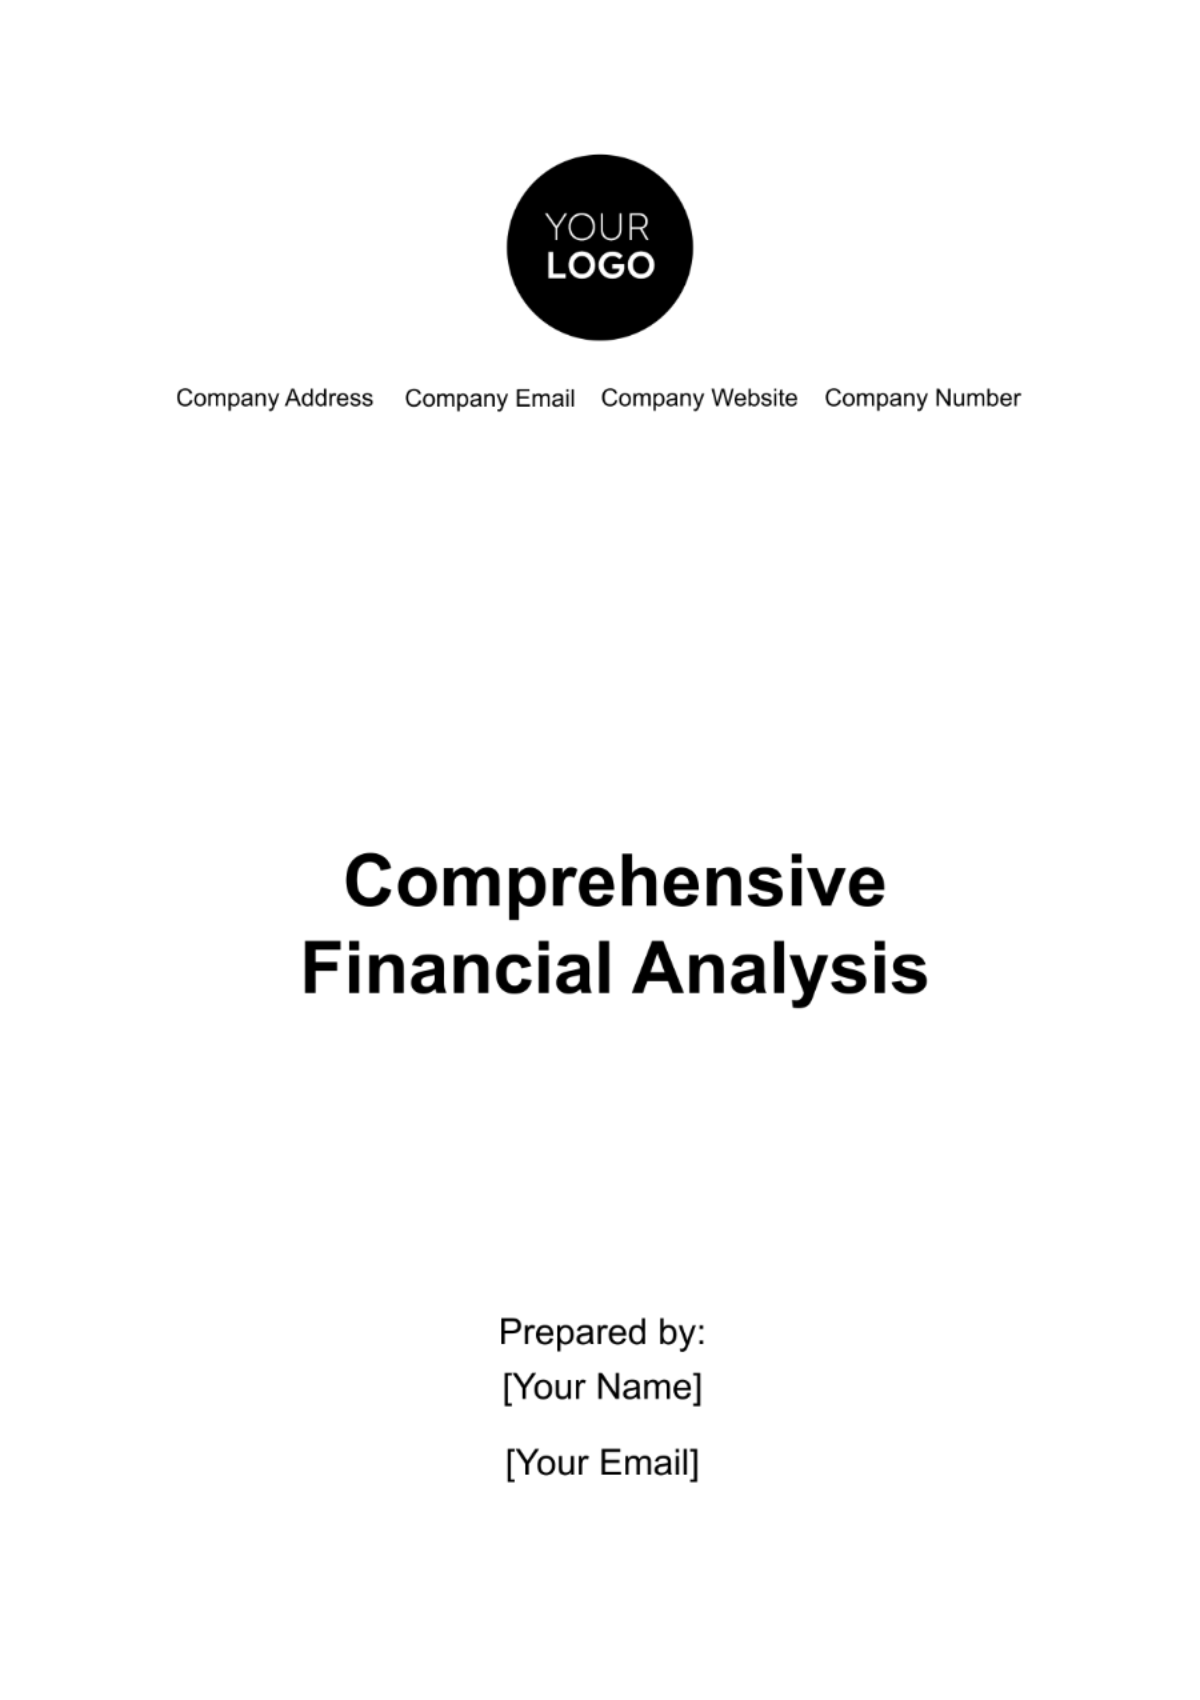 Comprehensive Financial Analysis Template